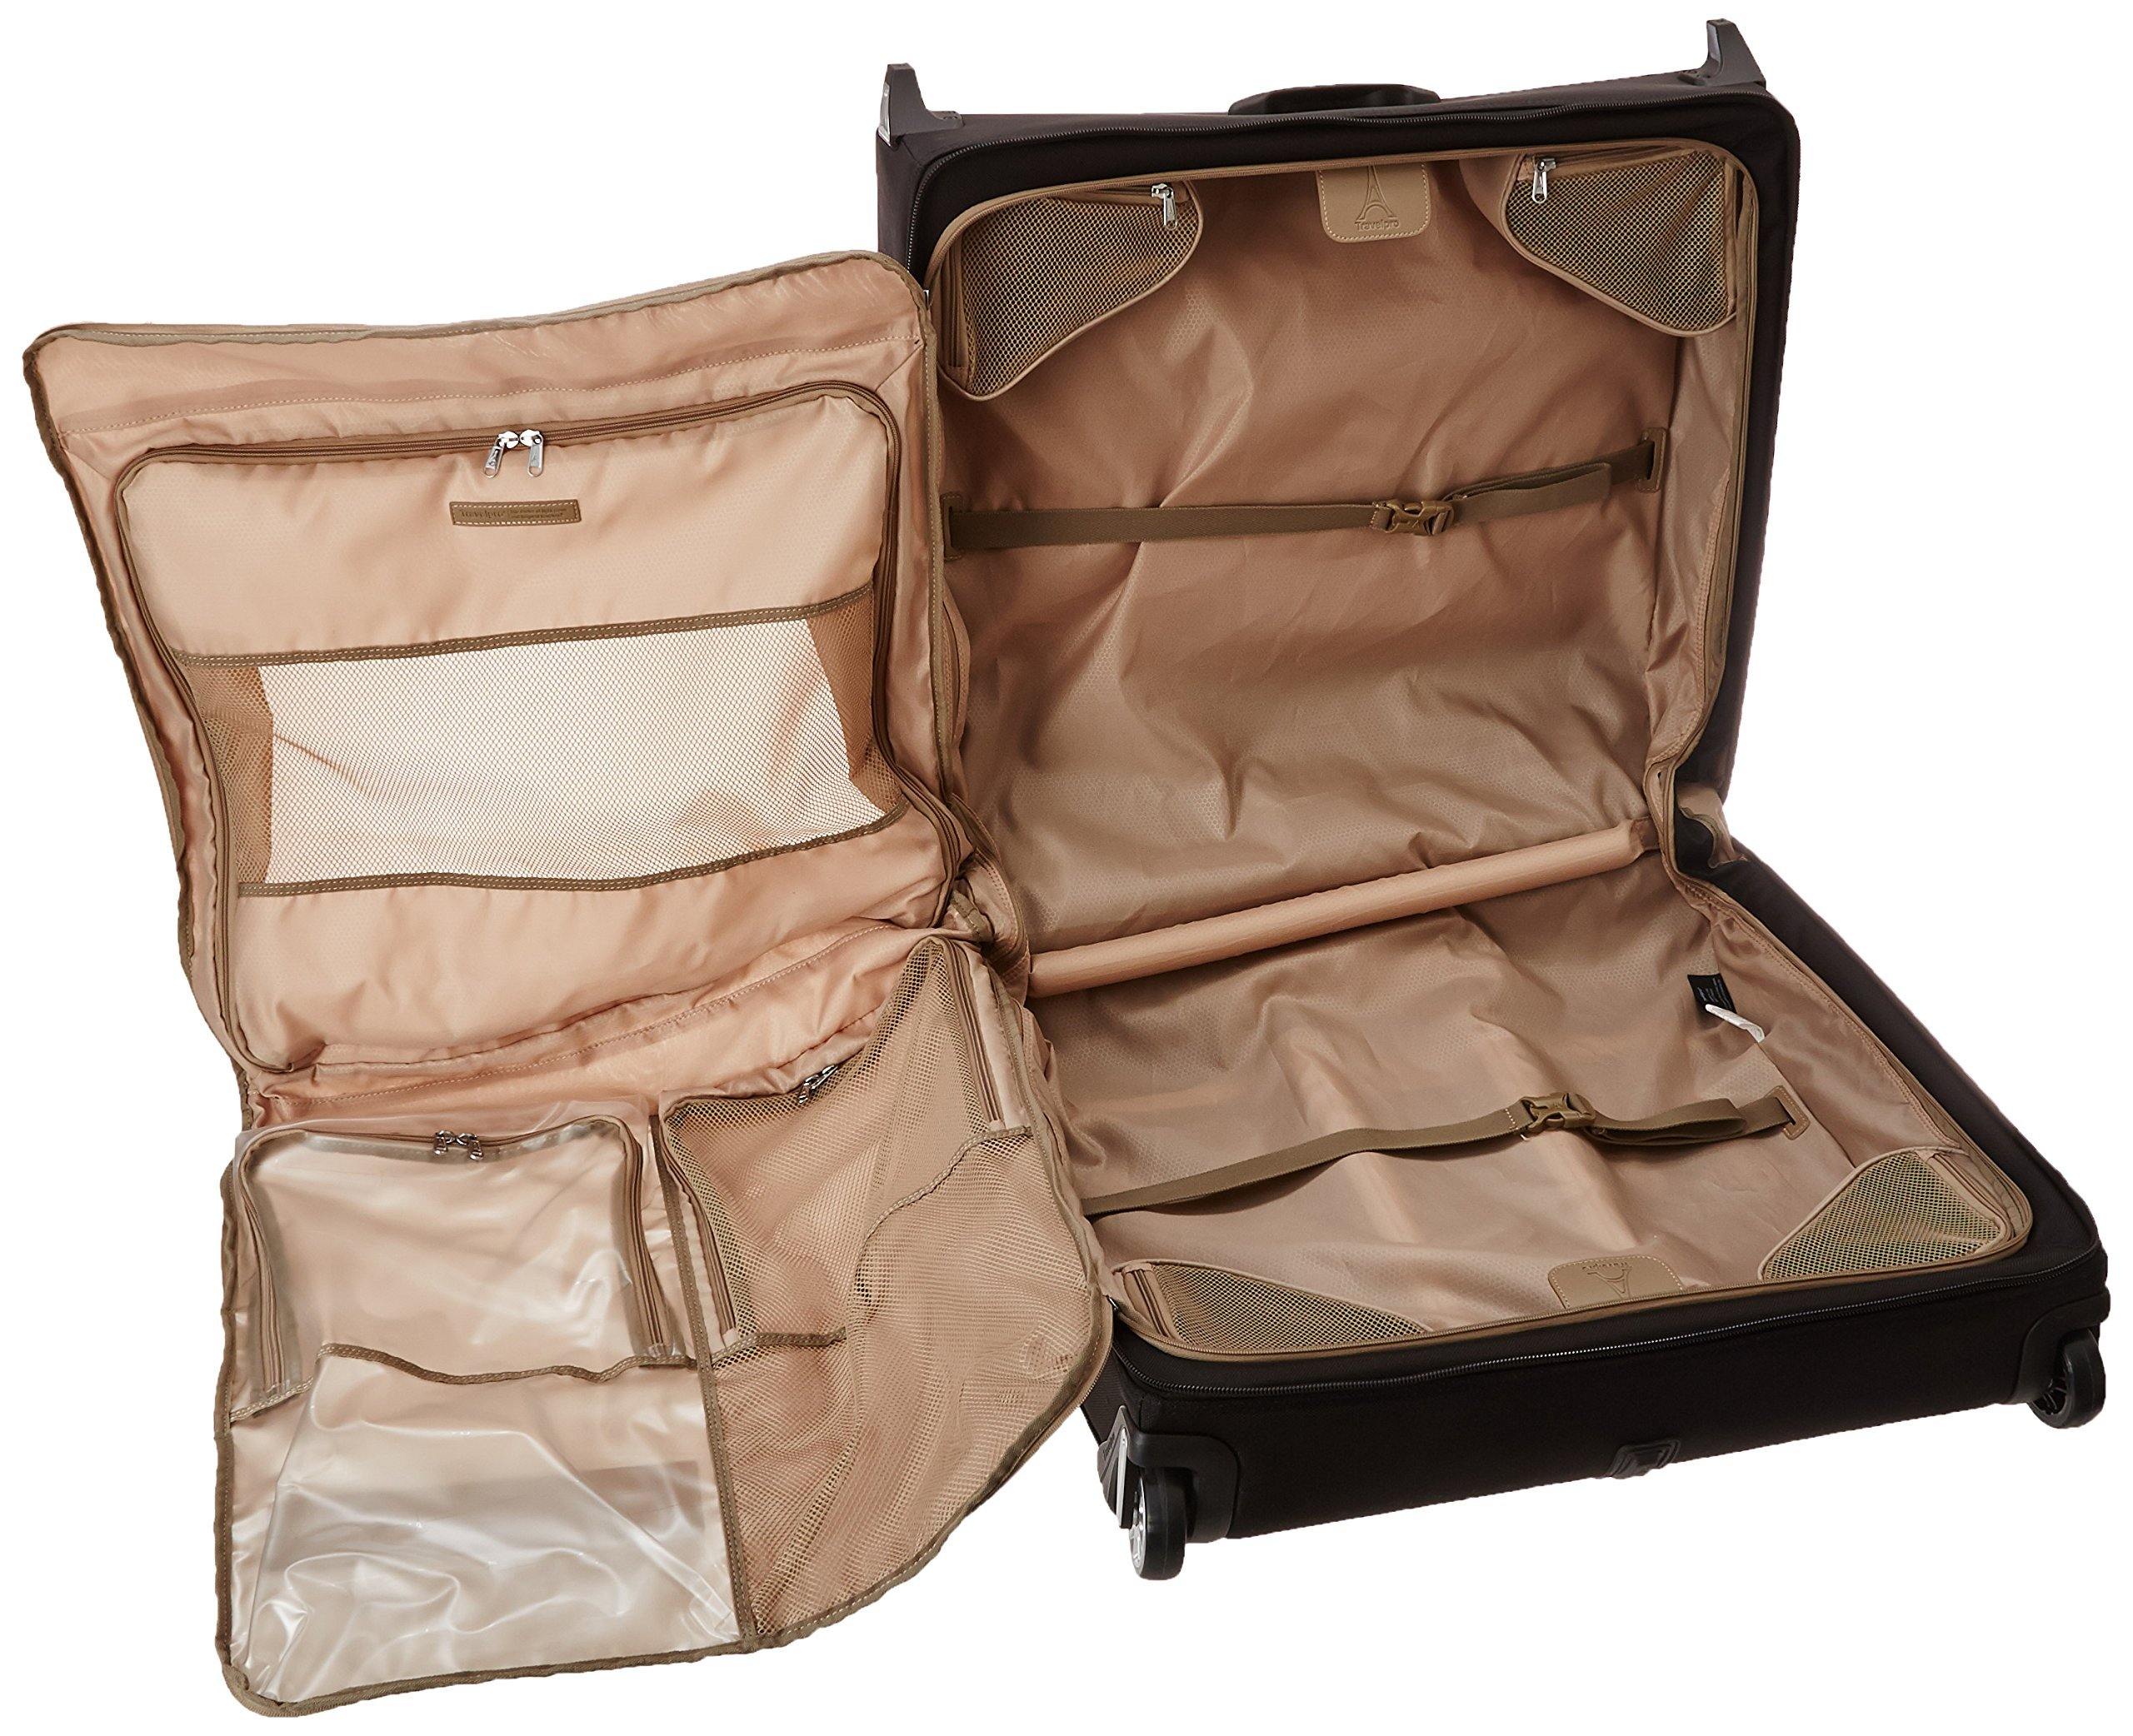 Platinum® Elite 50” Check-In Rolling Garment Bag – Travelpro